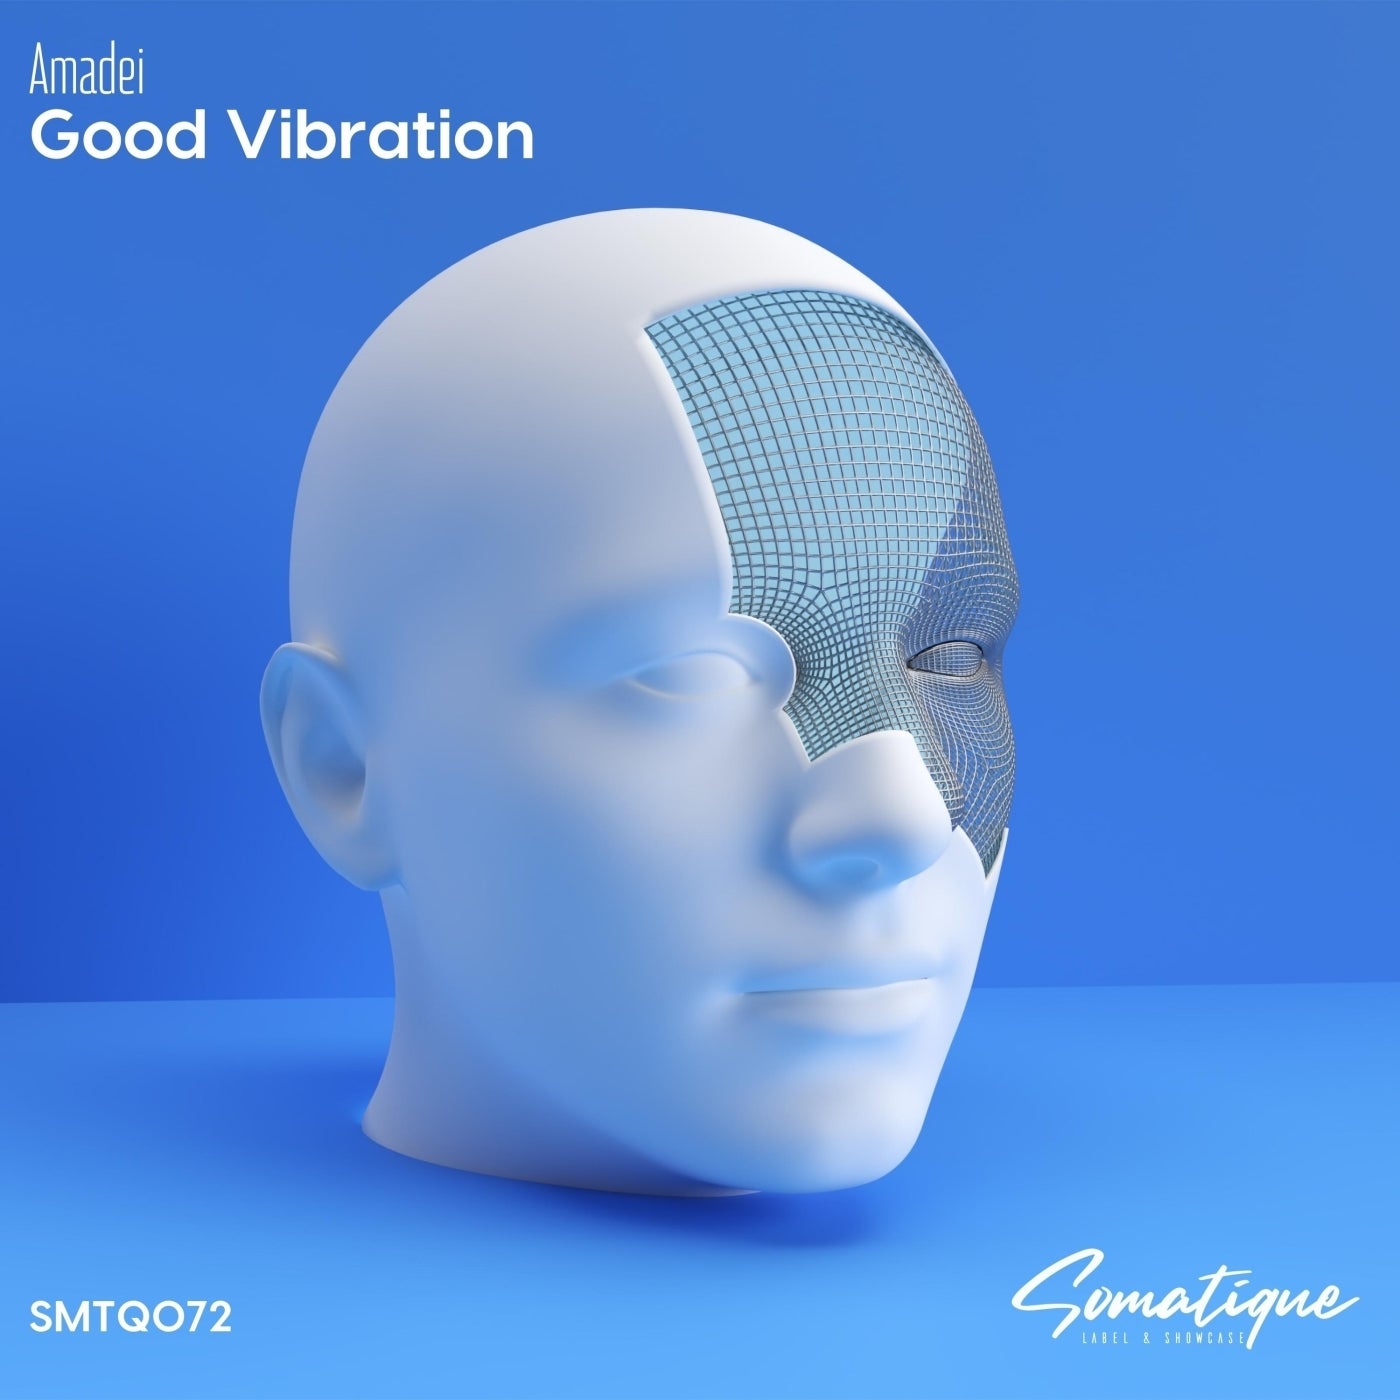 Amadei - Good Vibration (Original Mix)